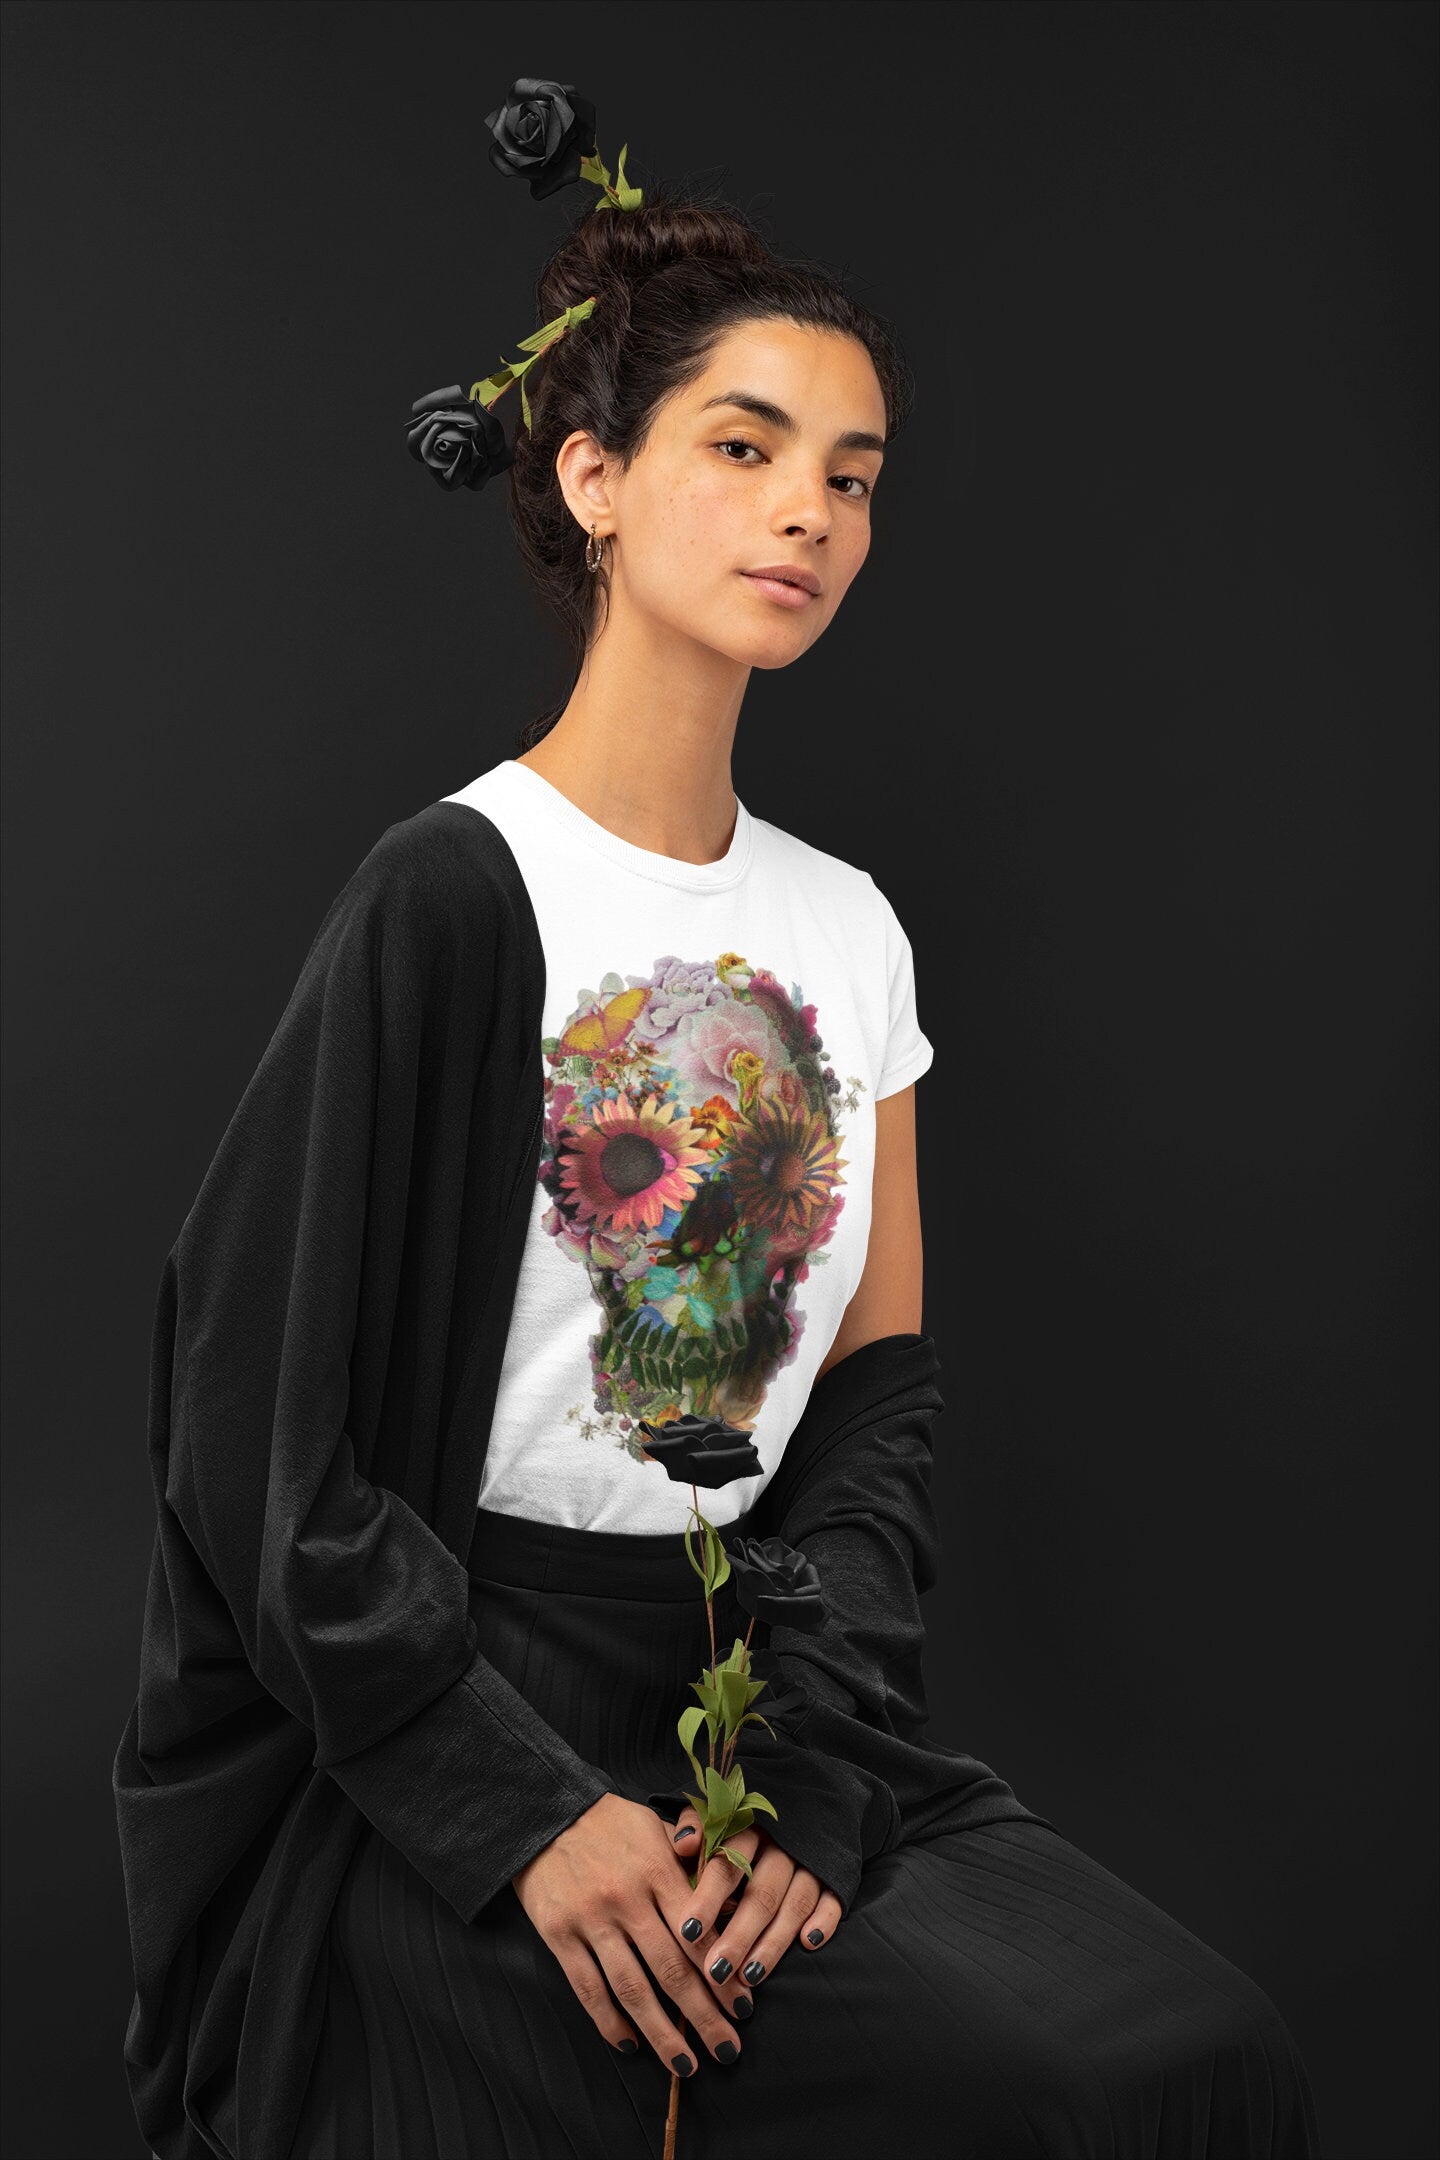 Floral Skull Print Womens T shirt, Sugar Skull Art Tshirt Gift For Her, Nature Skull Illustration Boho Graphic Tee, Bella Canvas T-Shirt